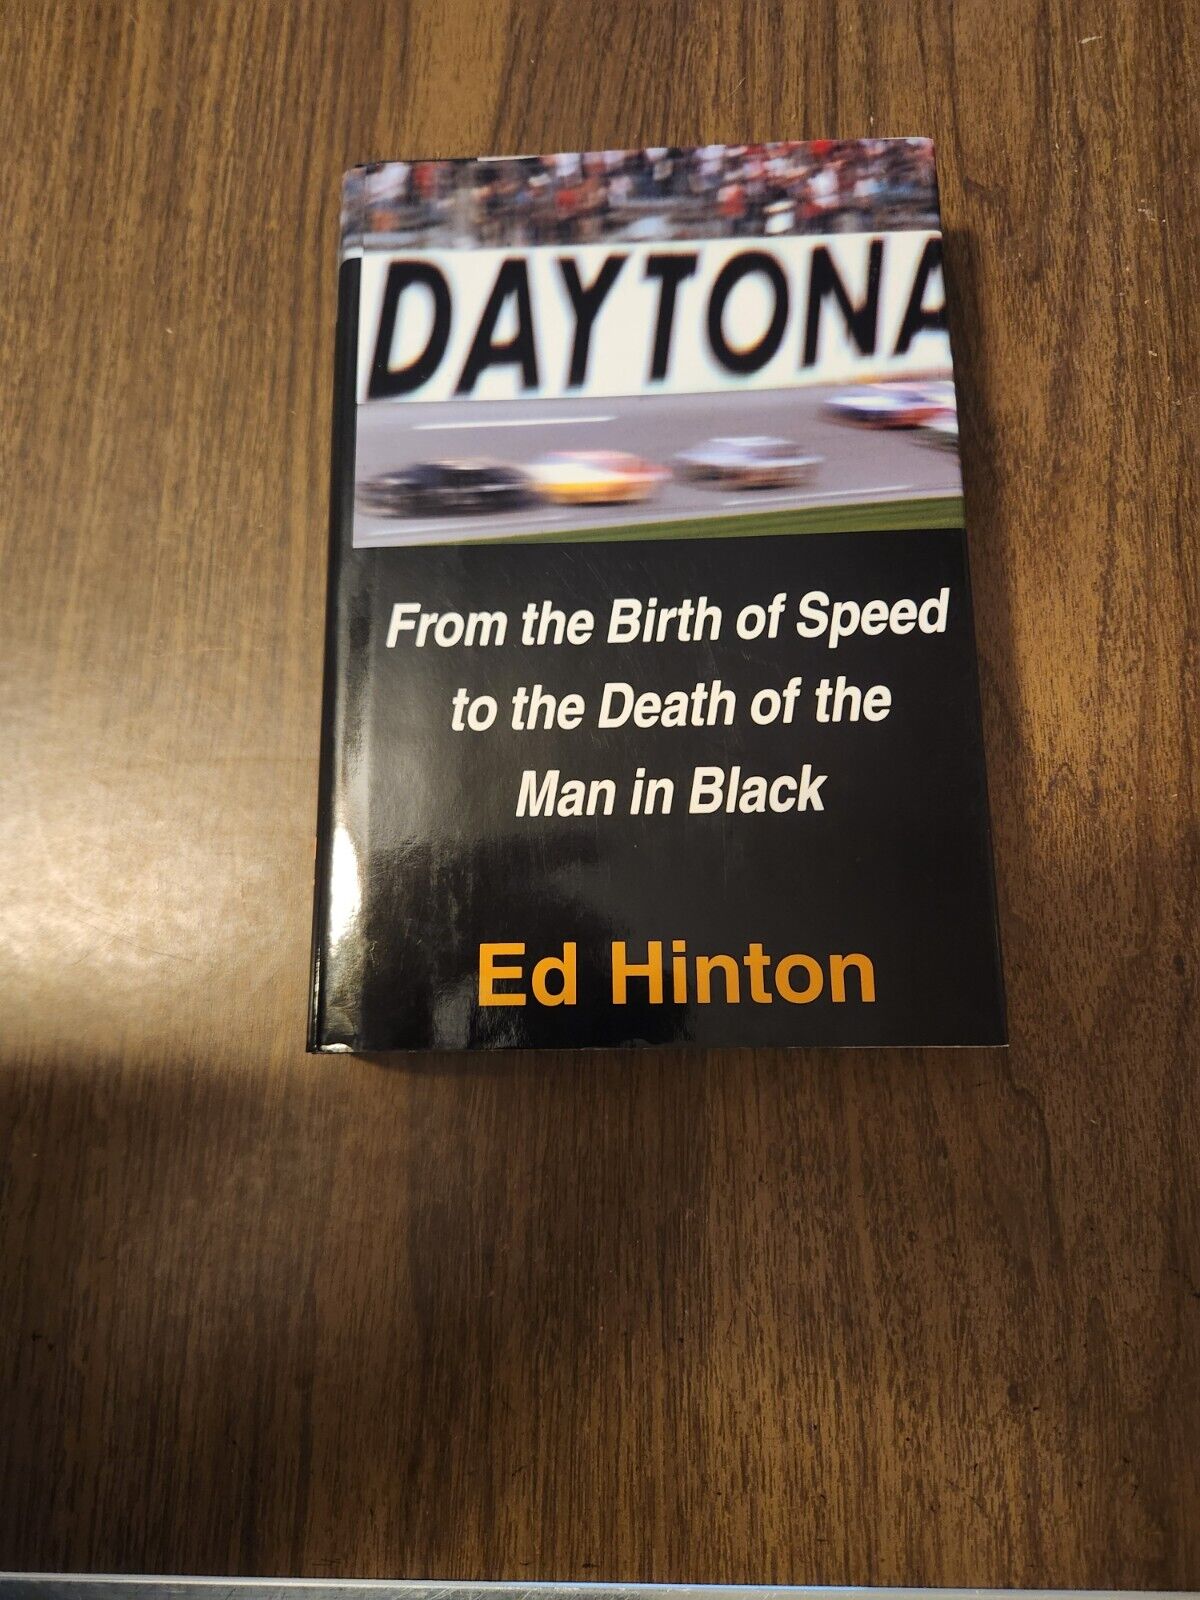 Richard Petty Autographed Daytona Hard Cover Book